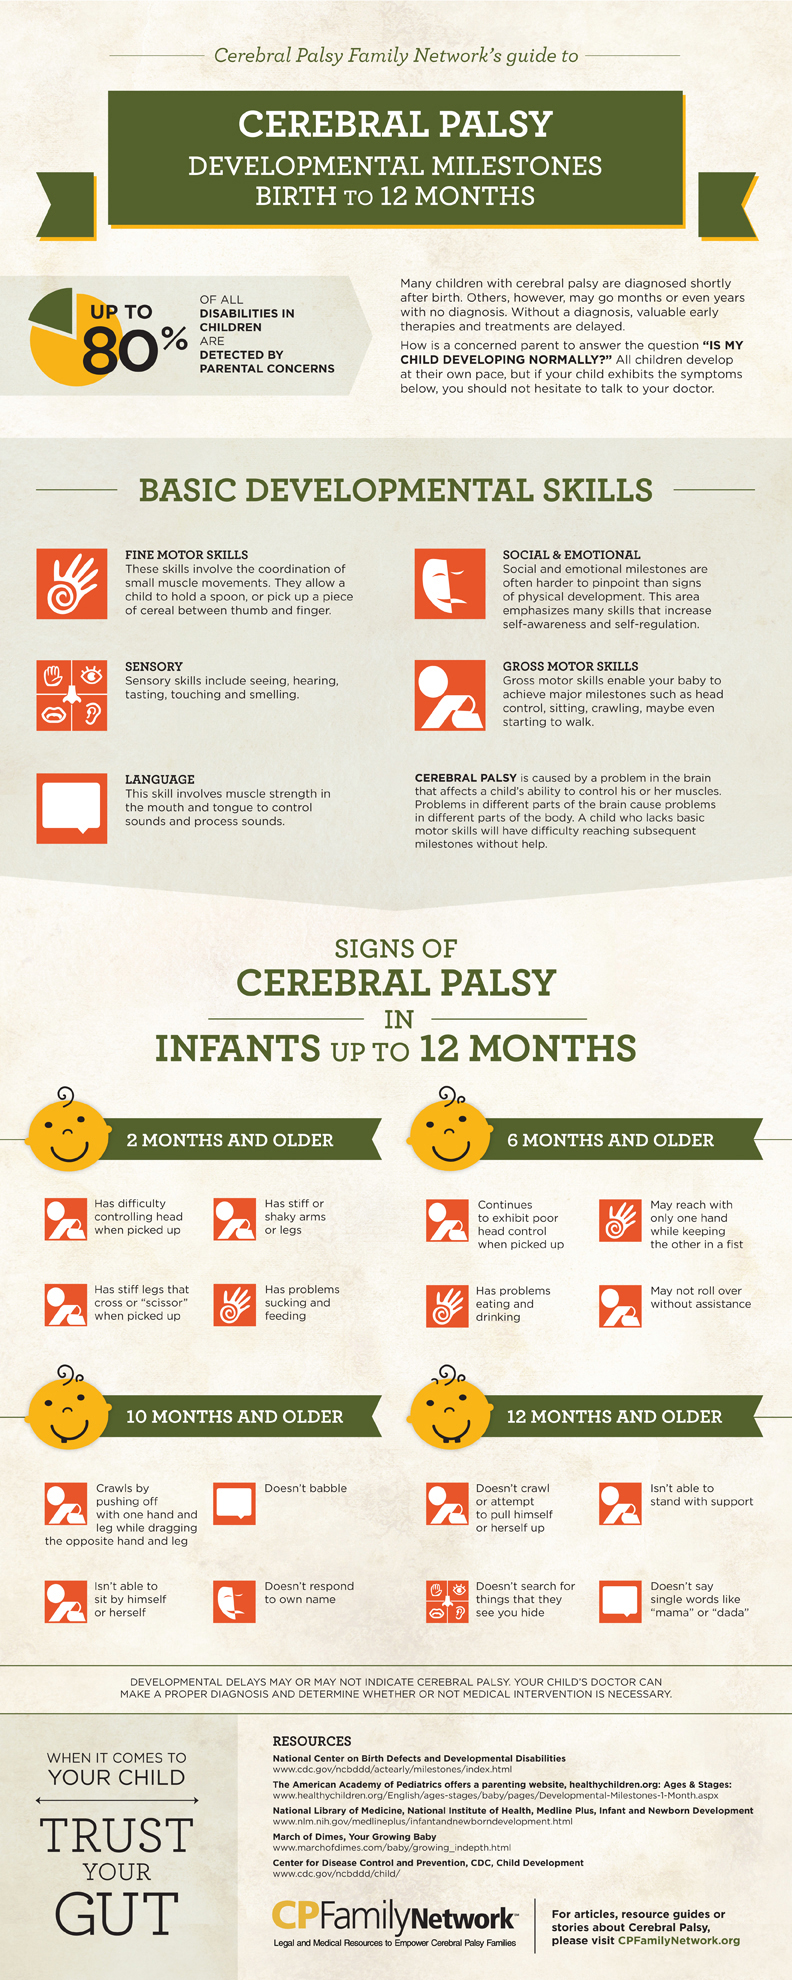 Cerebral Palsy - Development Milestones